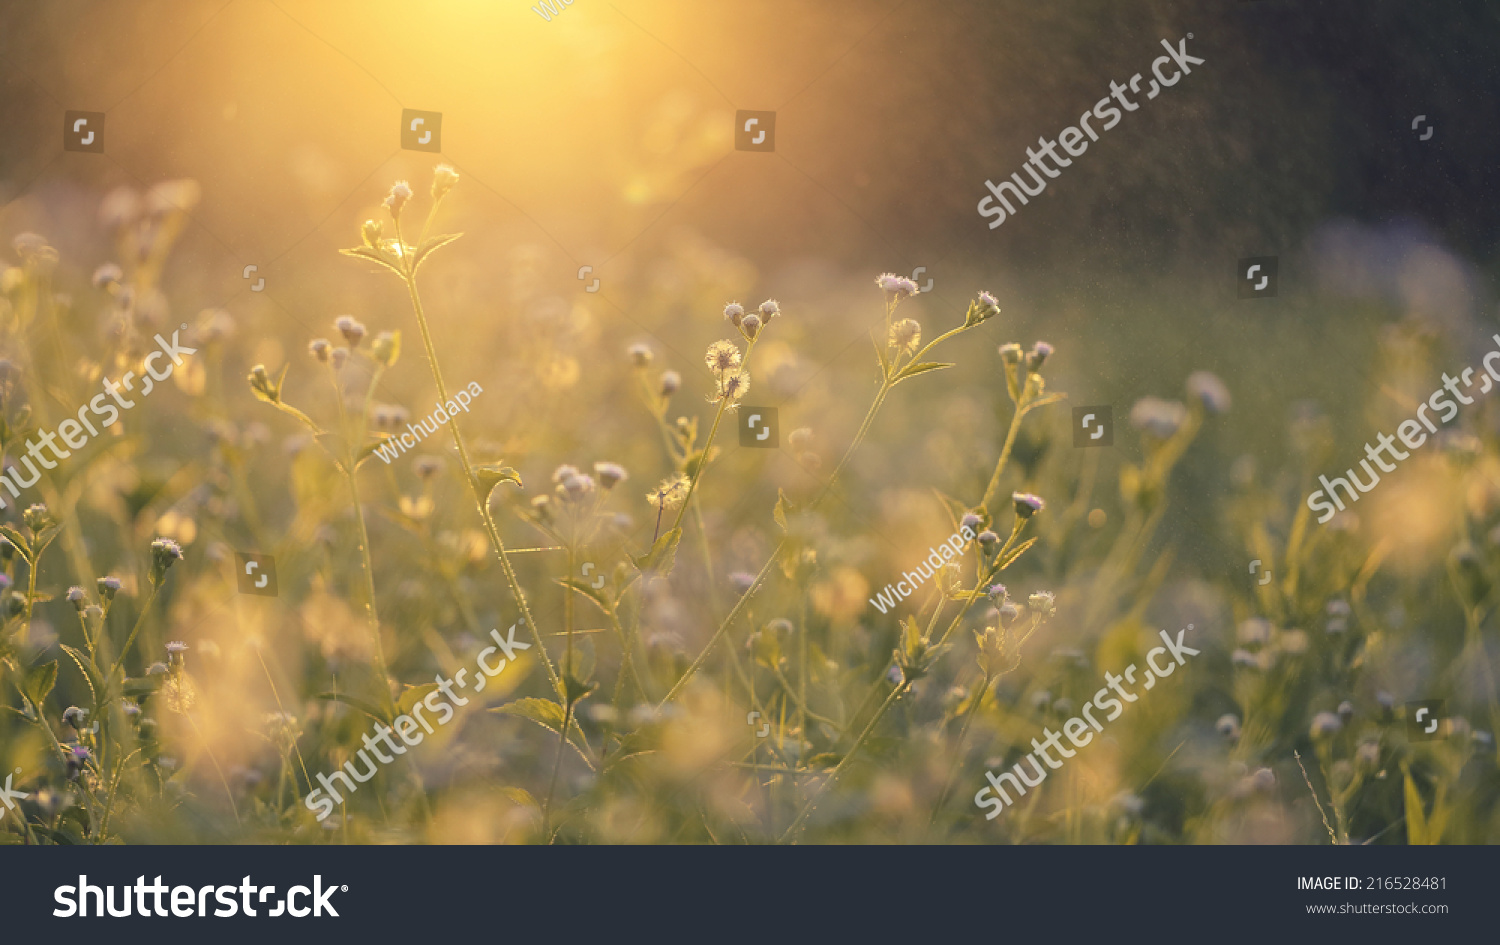 beautiful Grass flower in shallow dept of field #216528481